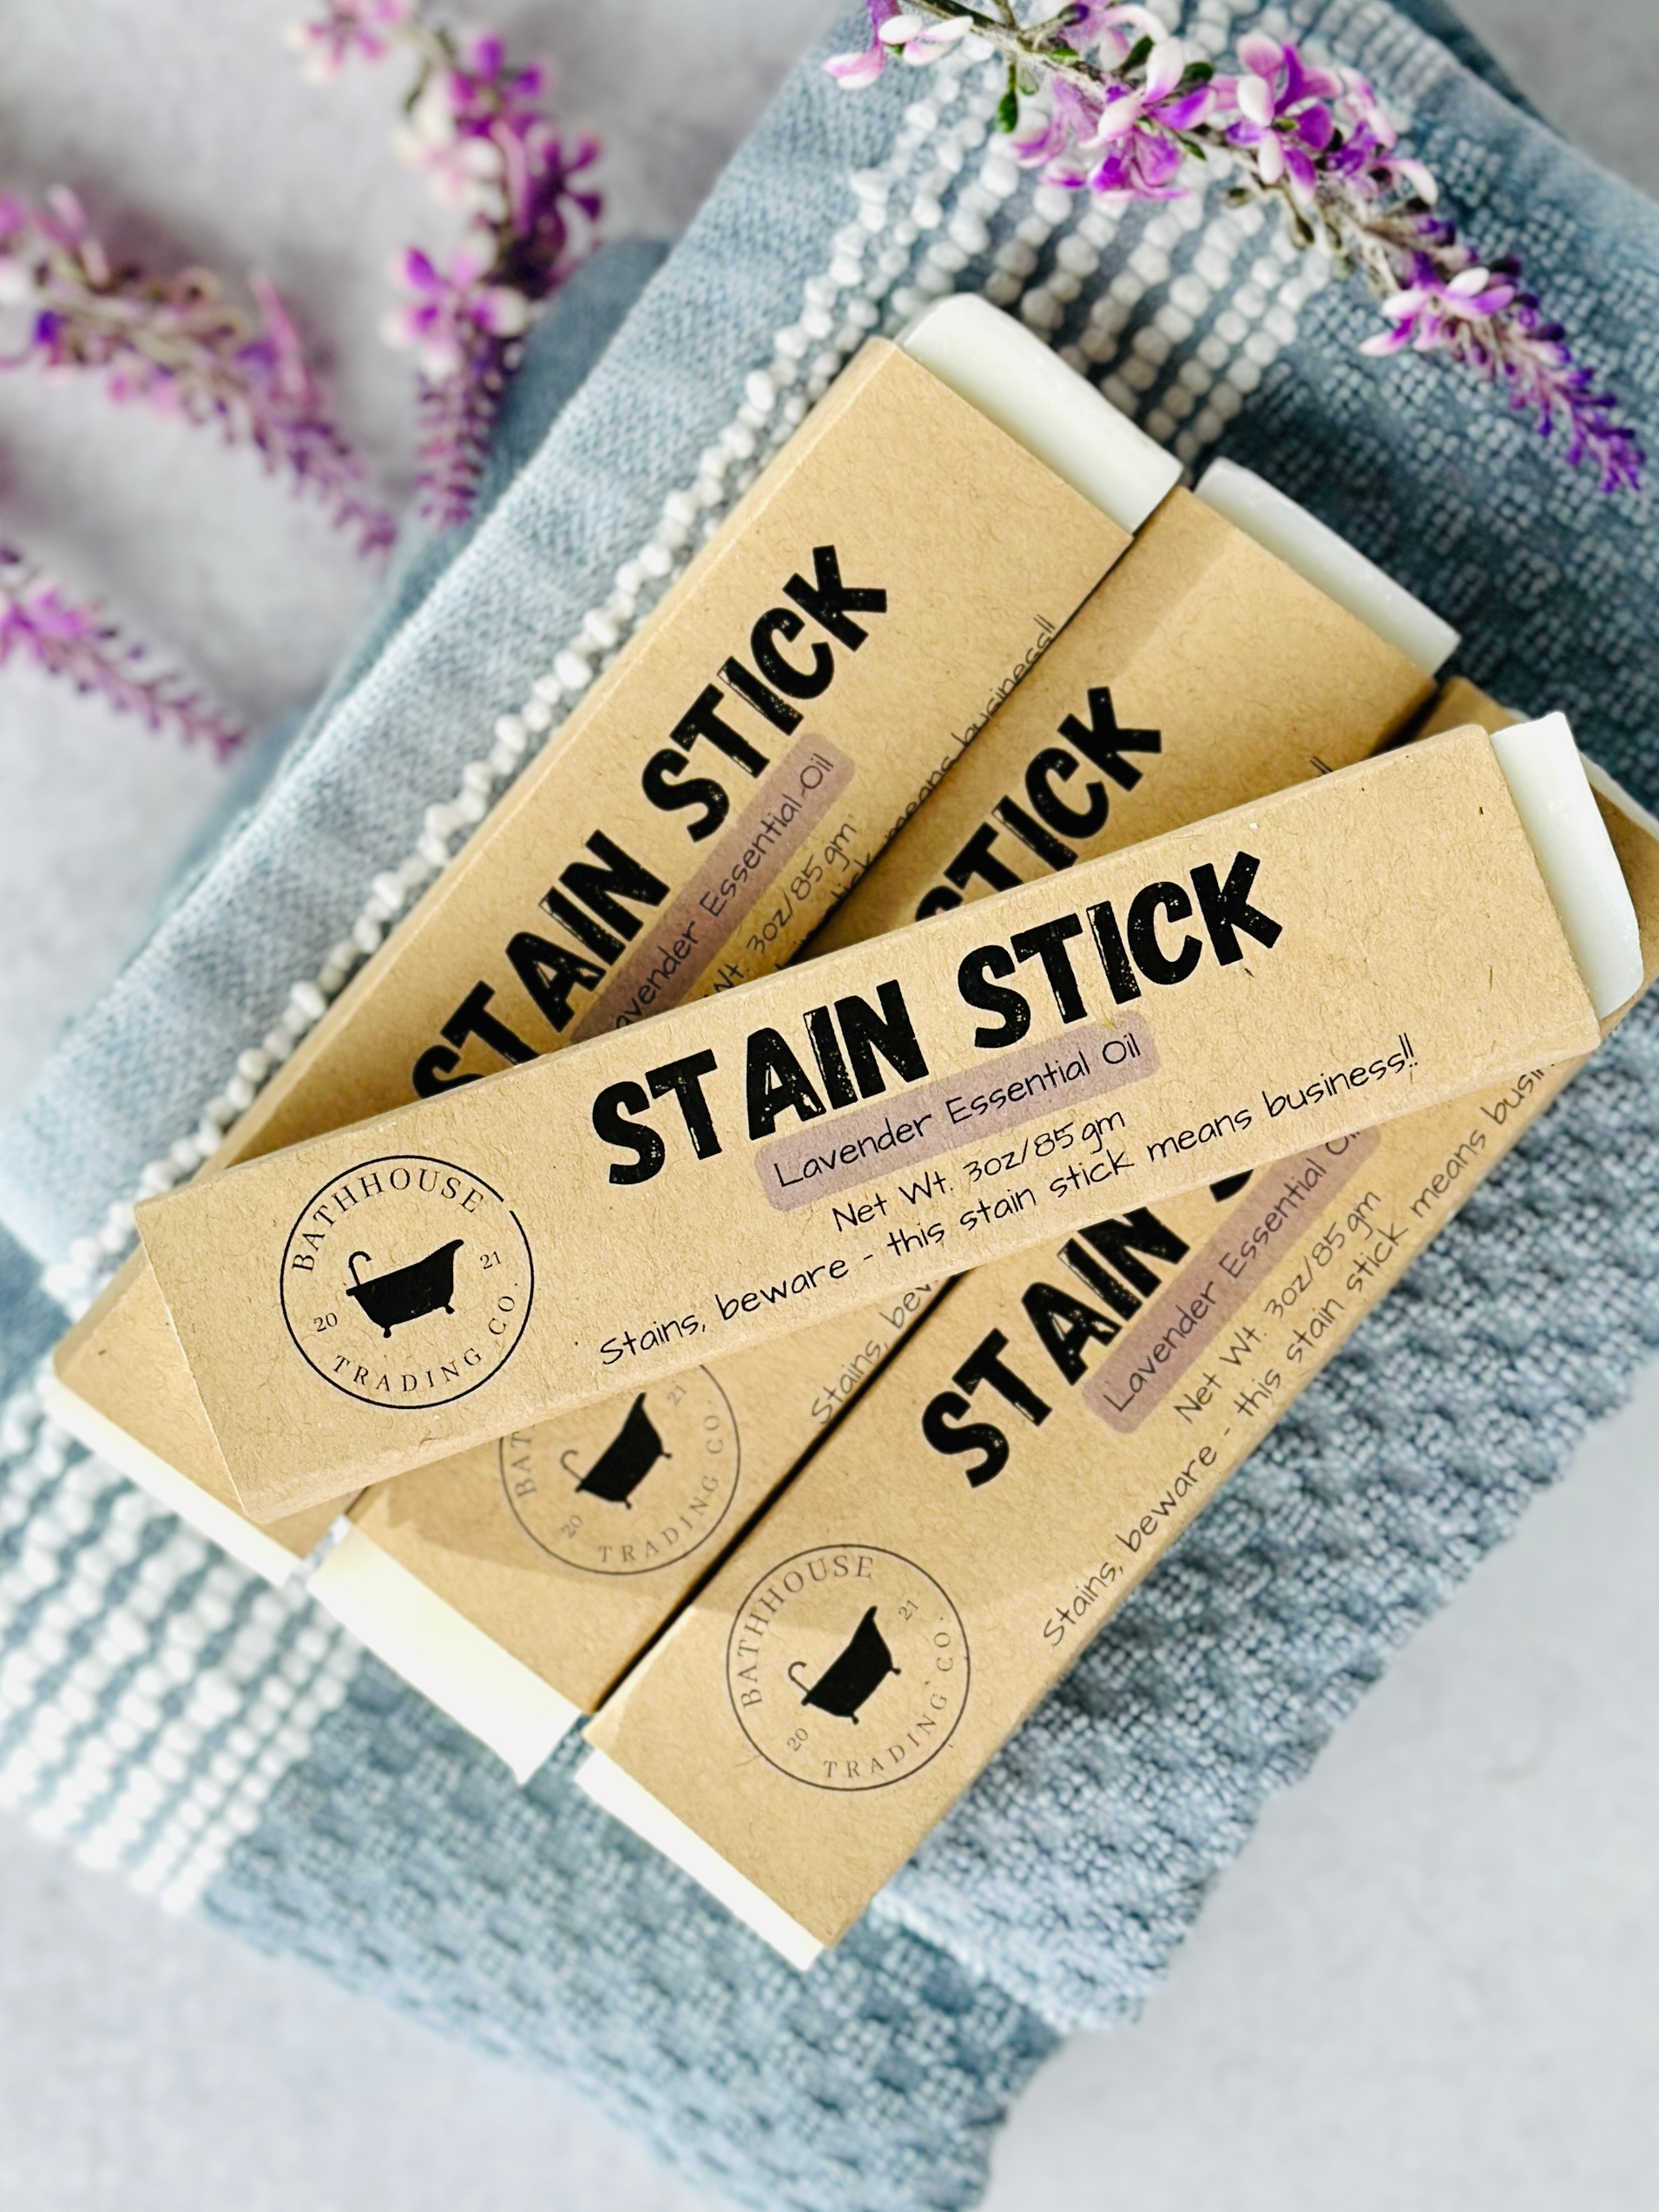 Stain Stick Lavender Essential Oil - Bathhouse Trading Company